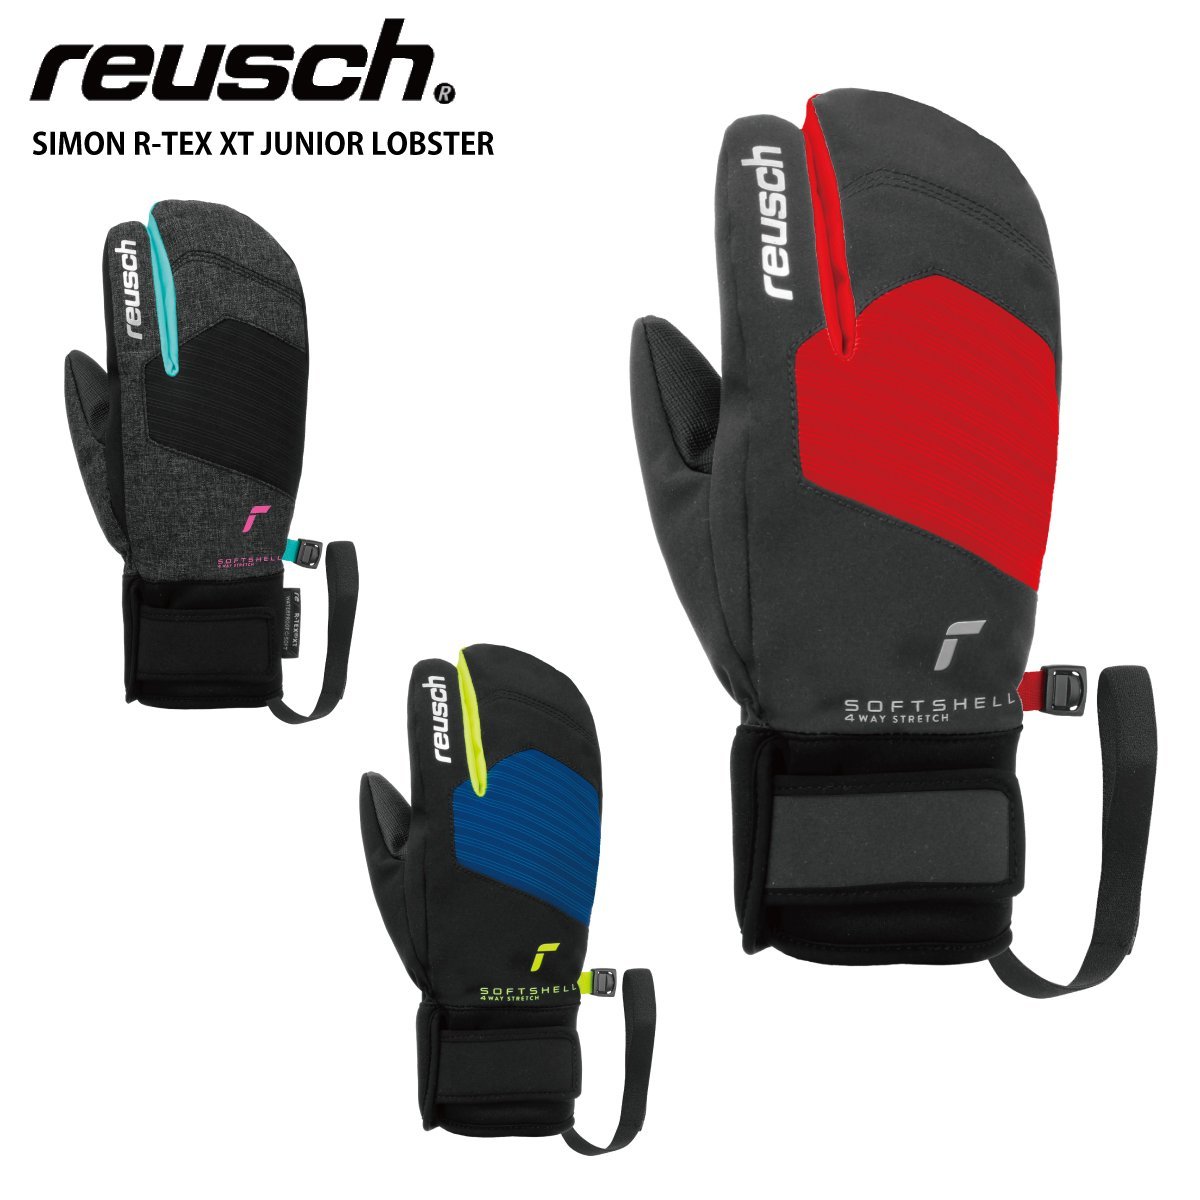 REUSCHroishu лыжи перчатка <2025>SIMON R-TEX XT JUNIOR LOBSTER / Simon R-TEX XT Junior лобстер / 6261810